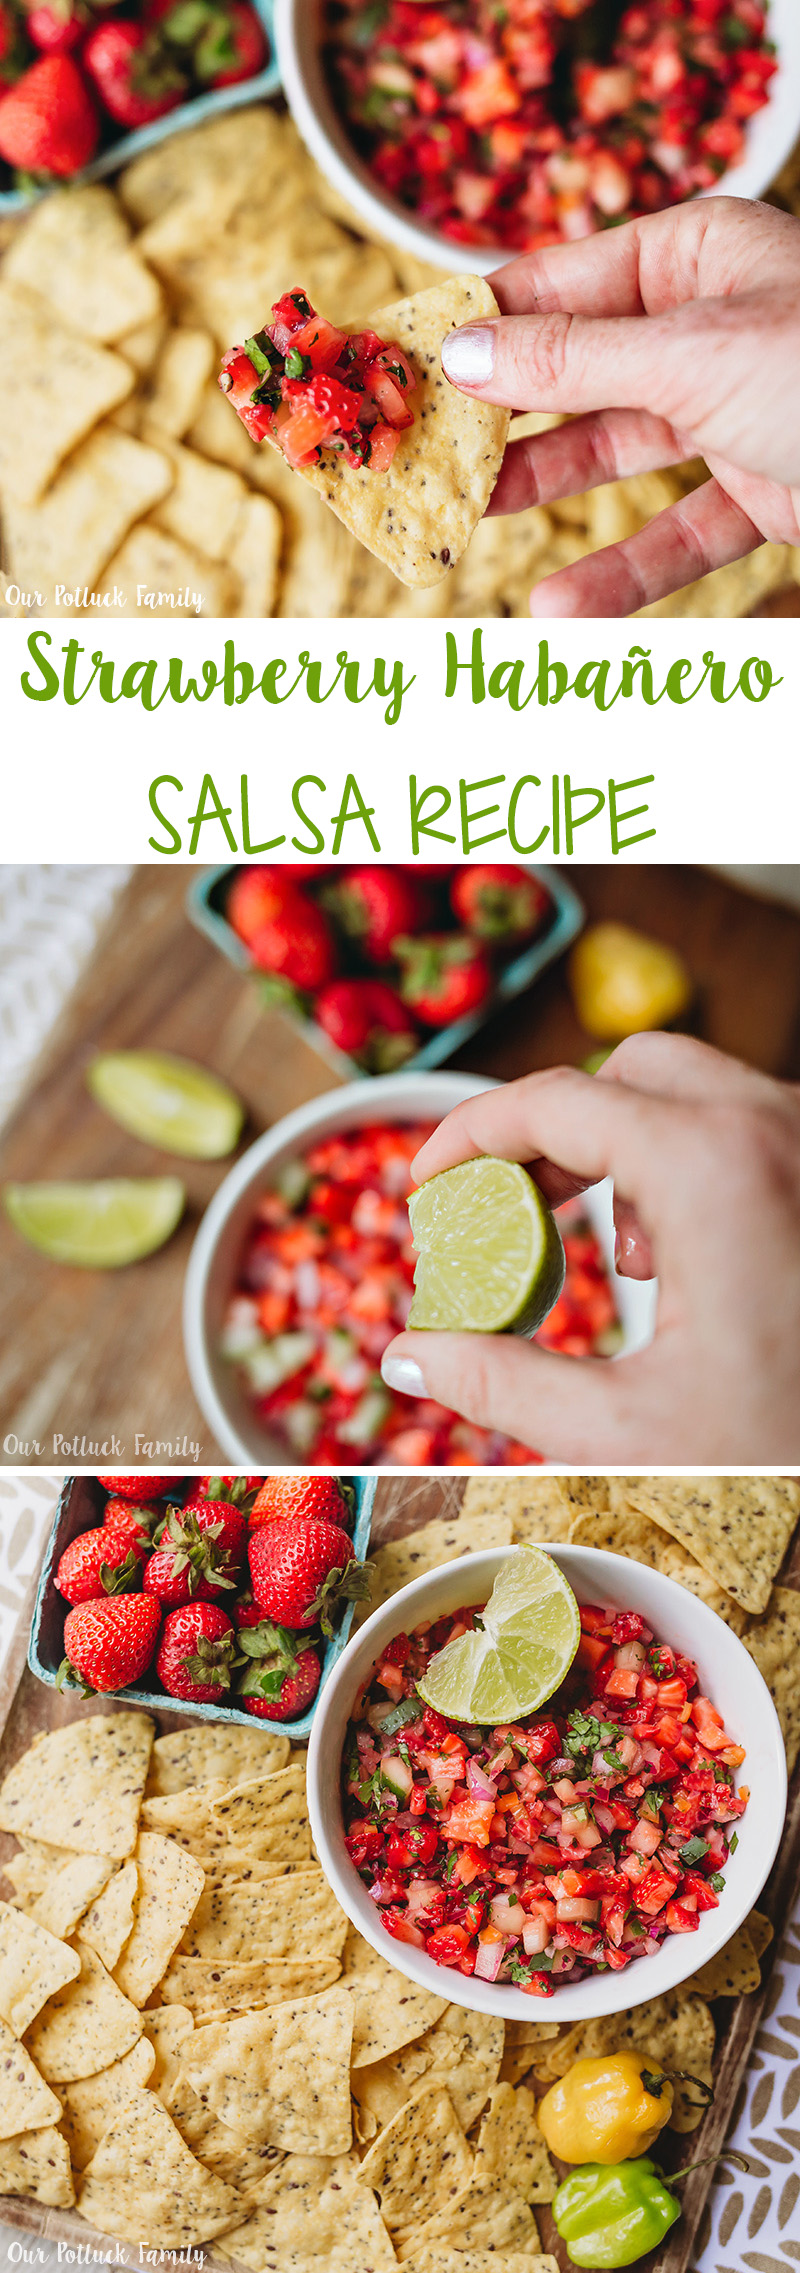 Strawberry Habanero Salsa spicy recipe